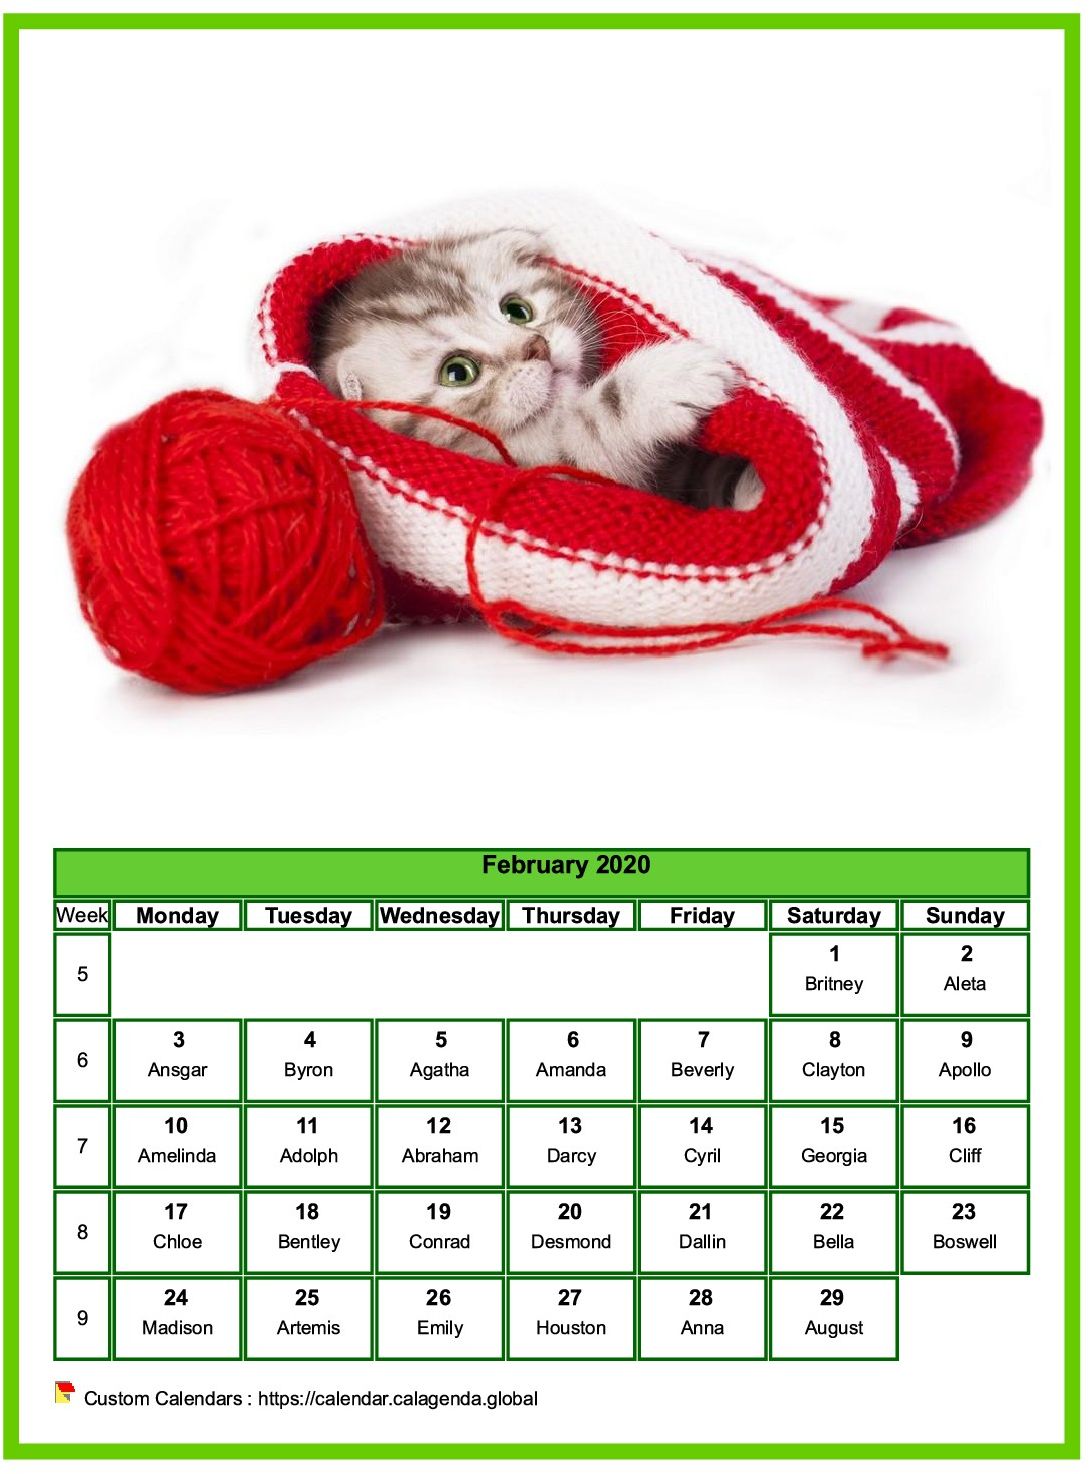 Calendar February 2020 cats